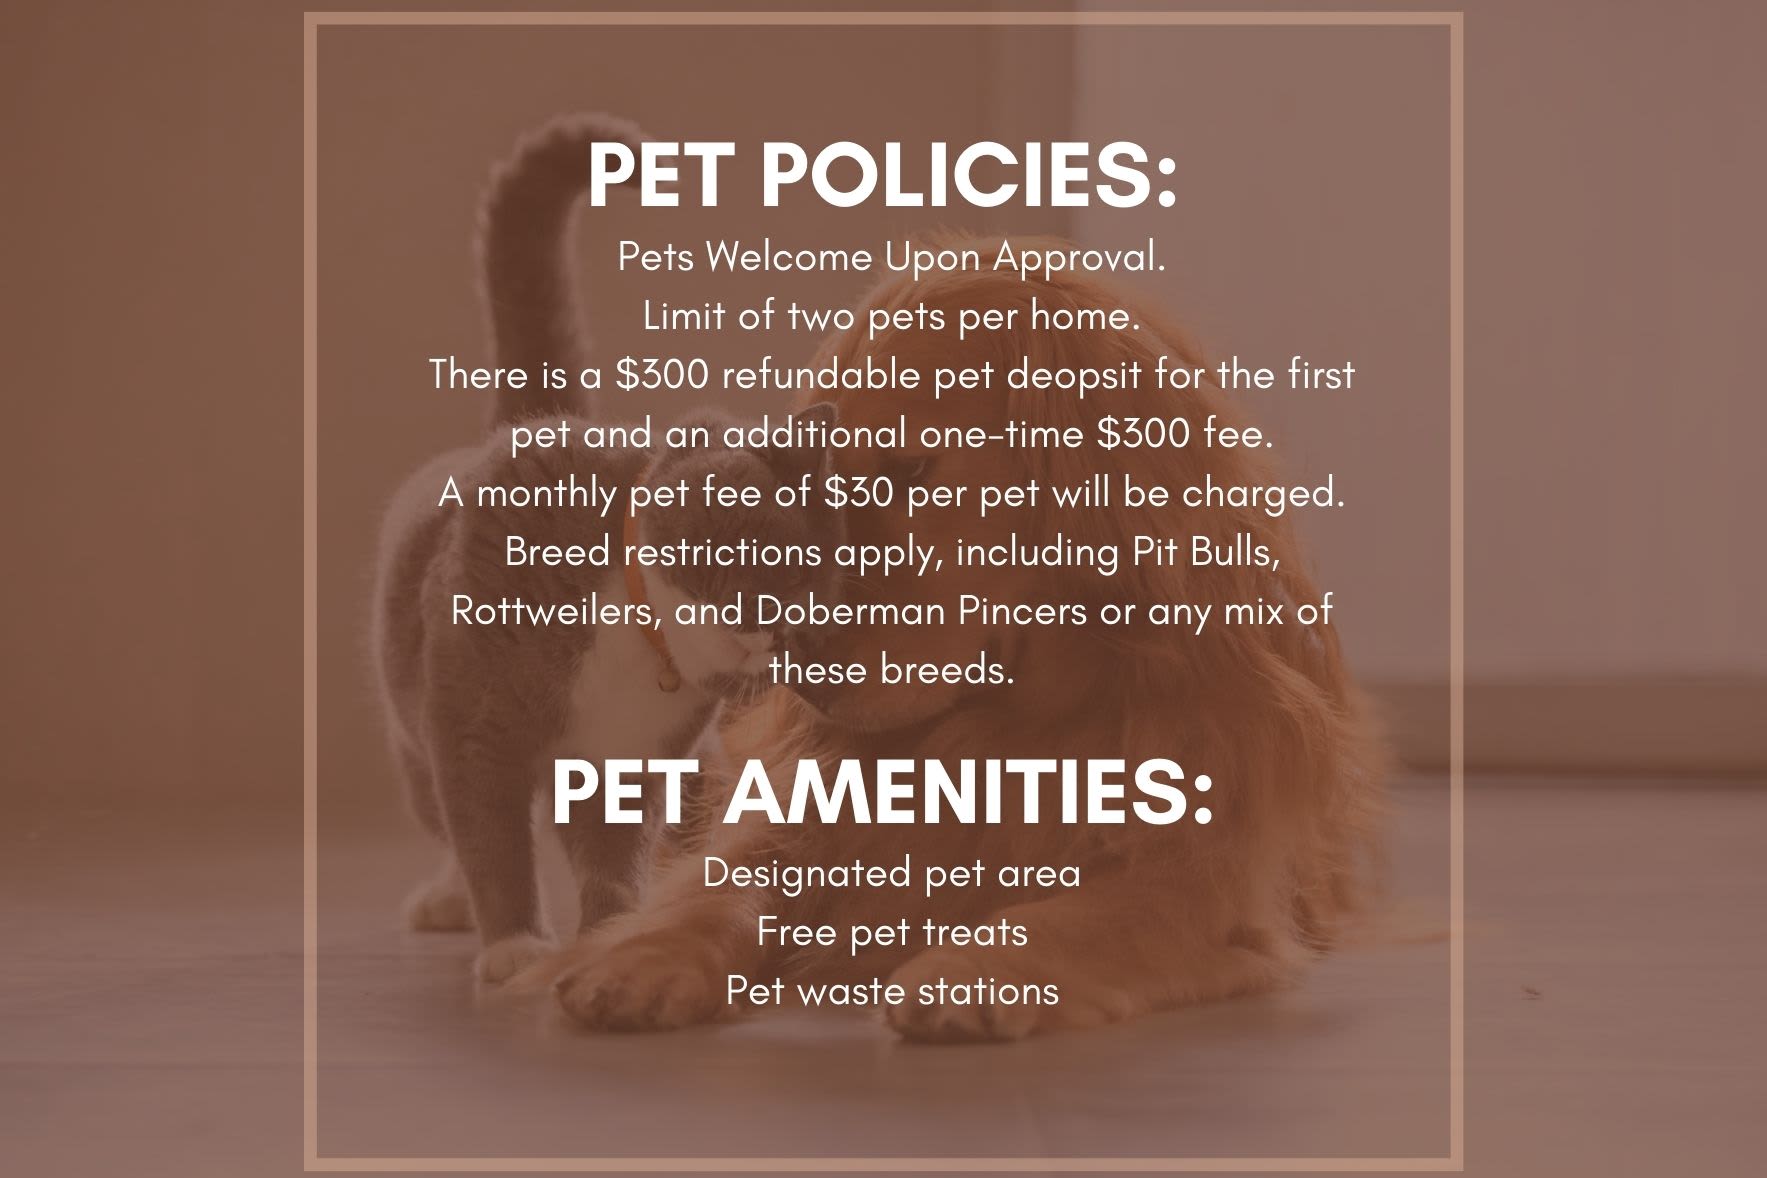 Photo of pet restrictions at Salt River Flats in Phoenix, Arizona